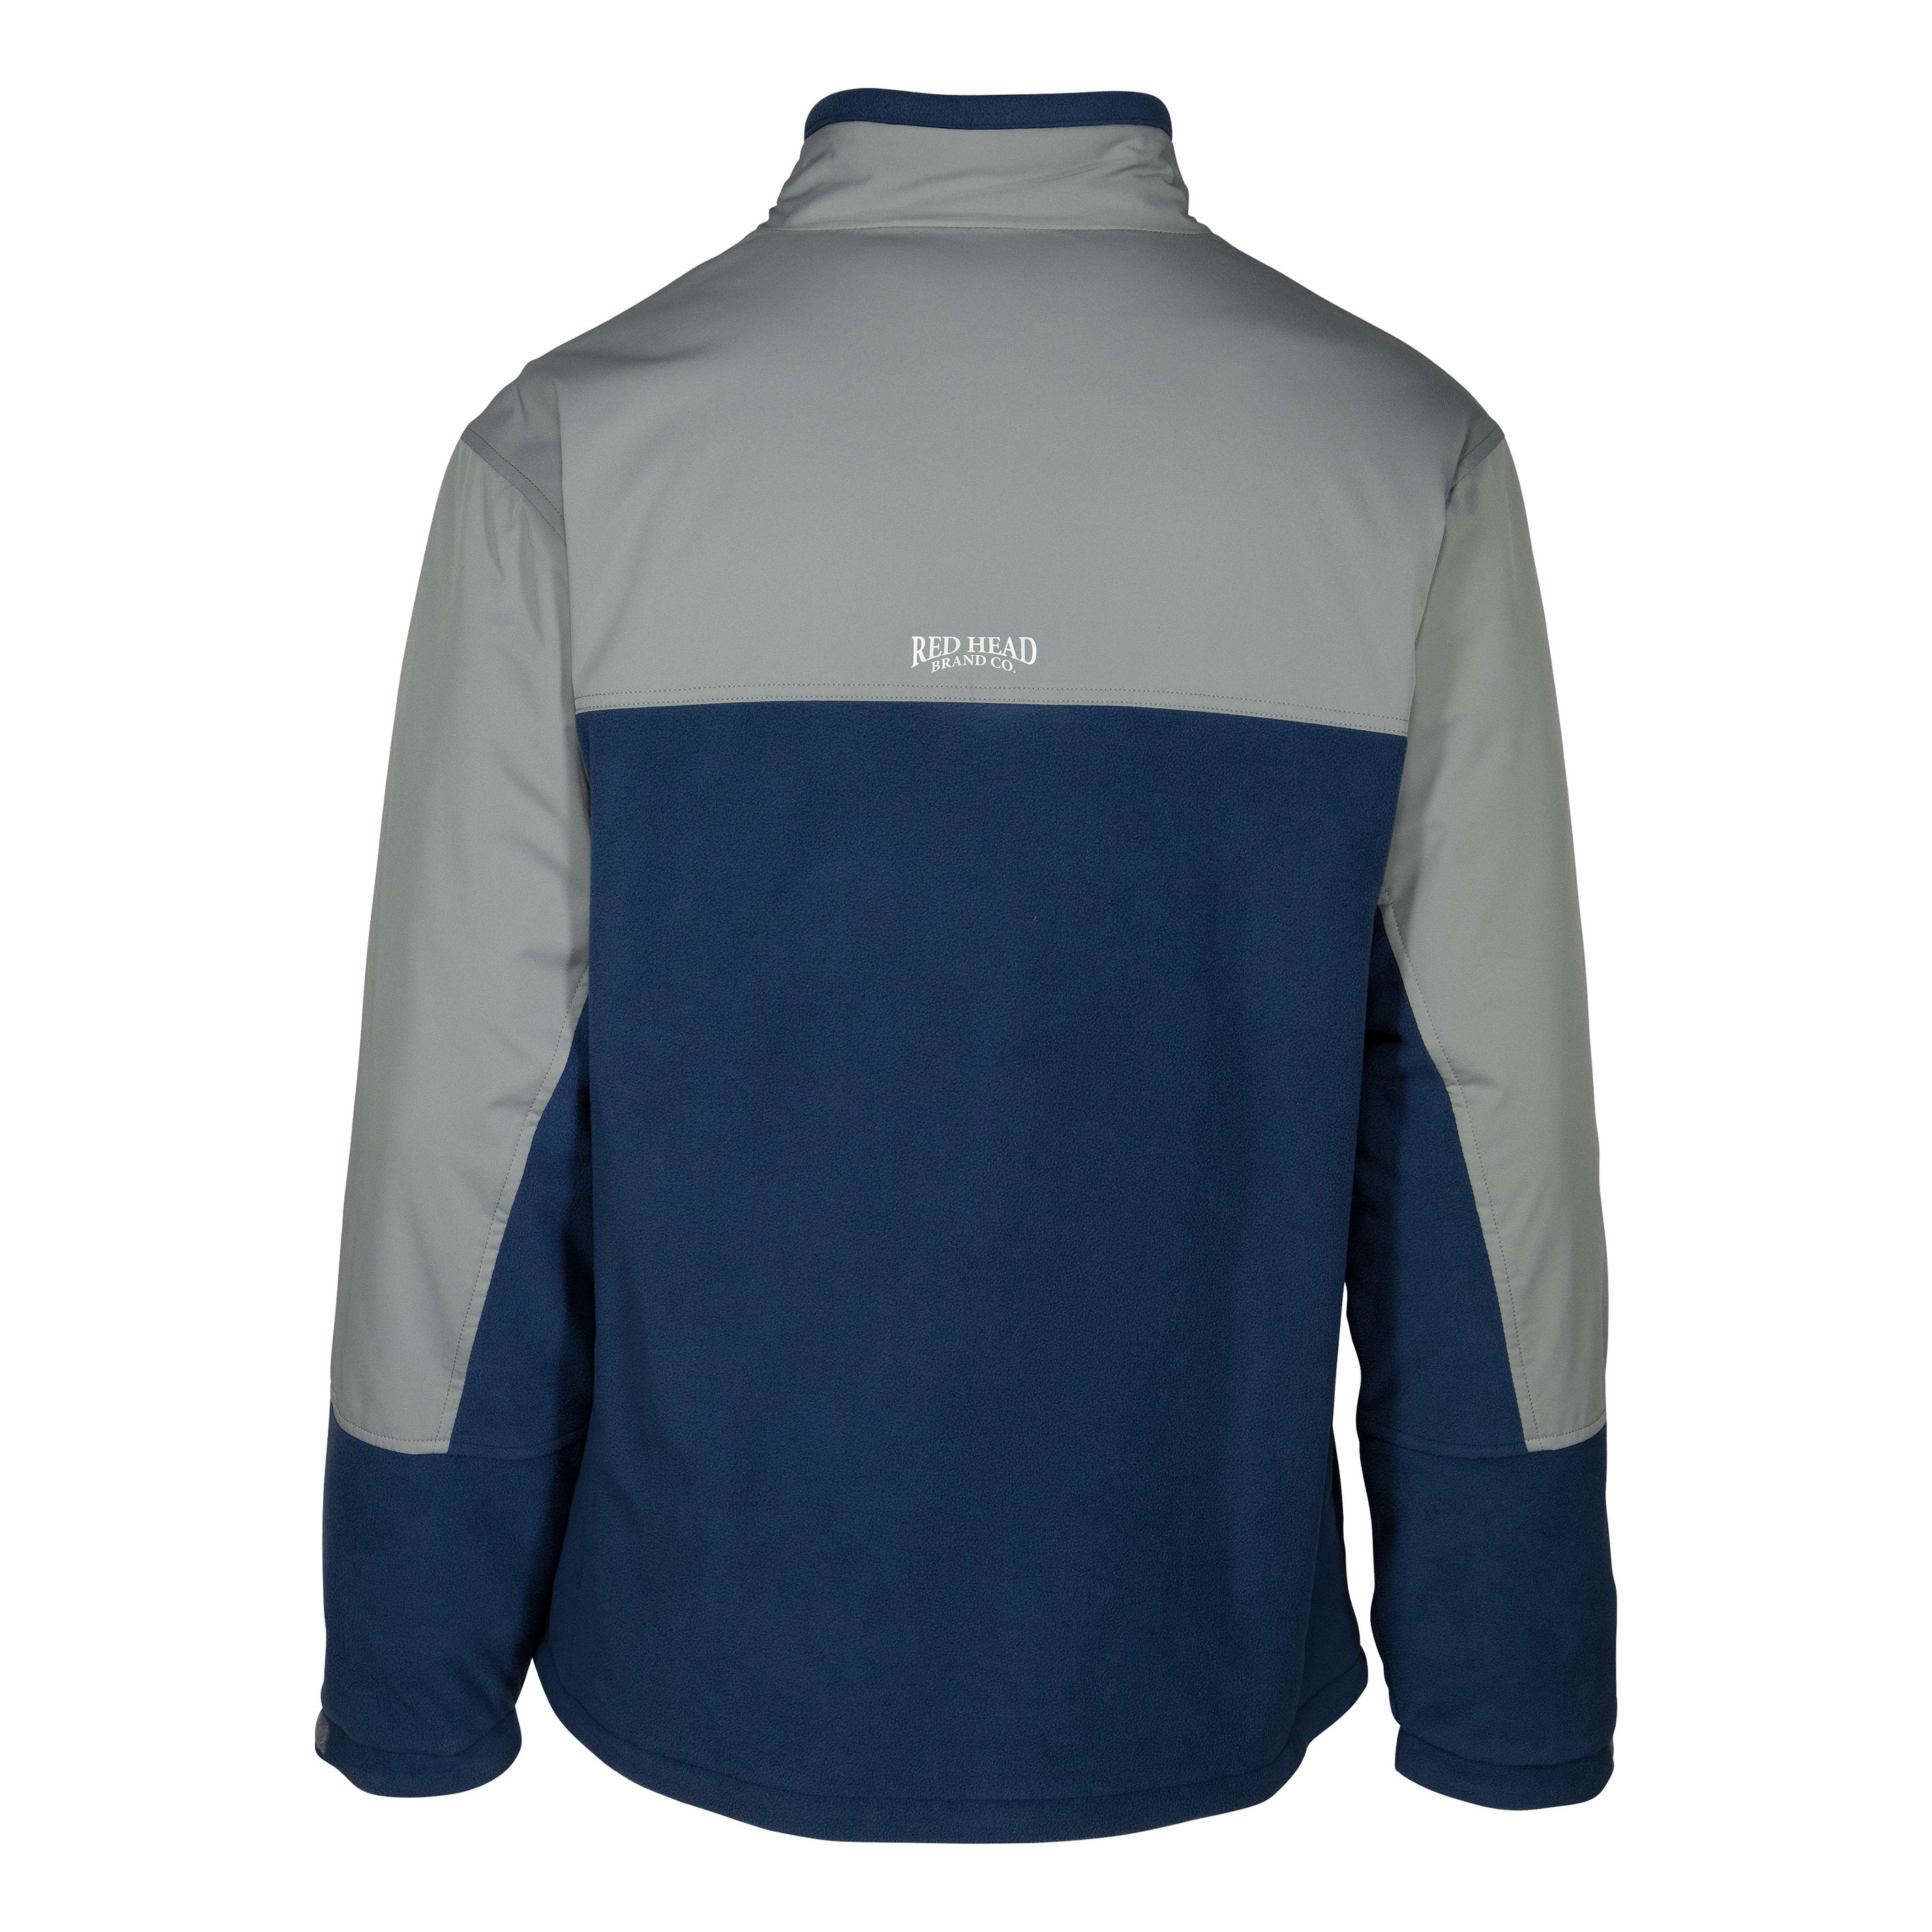 RedHead® Men’s Insulated Fleece Jacket - Grey/Navy - back